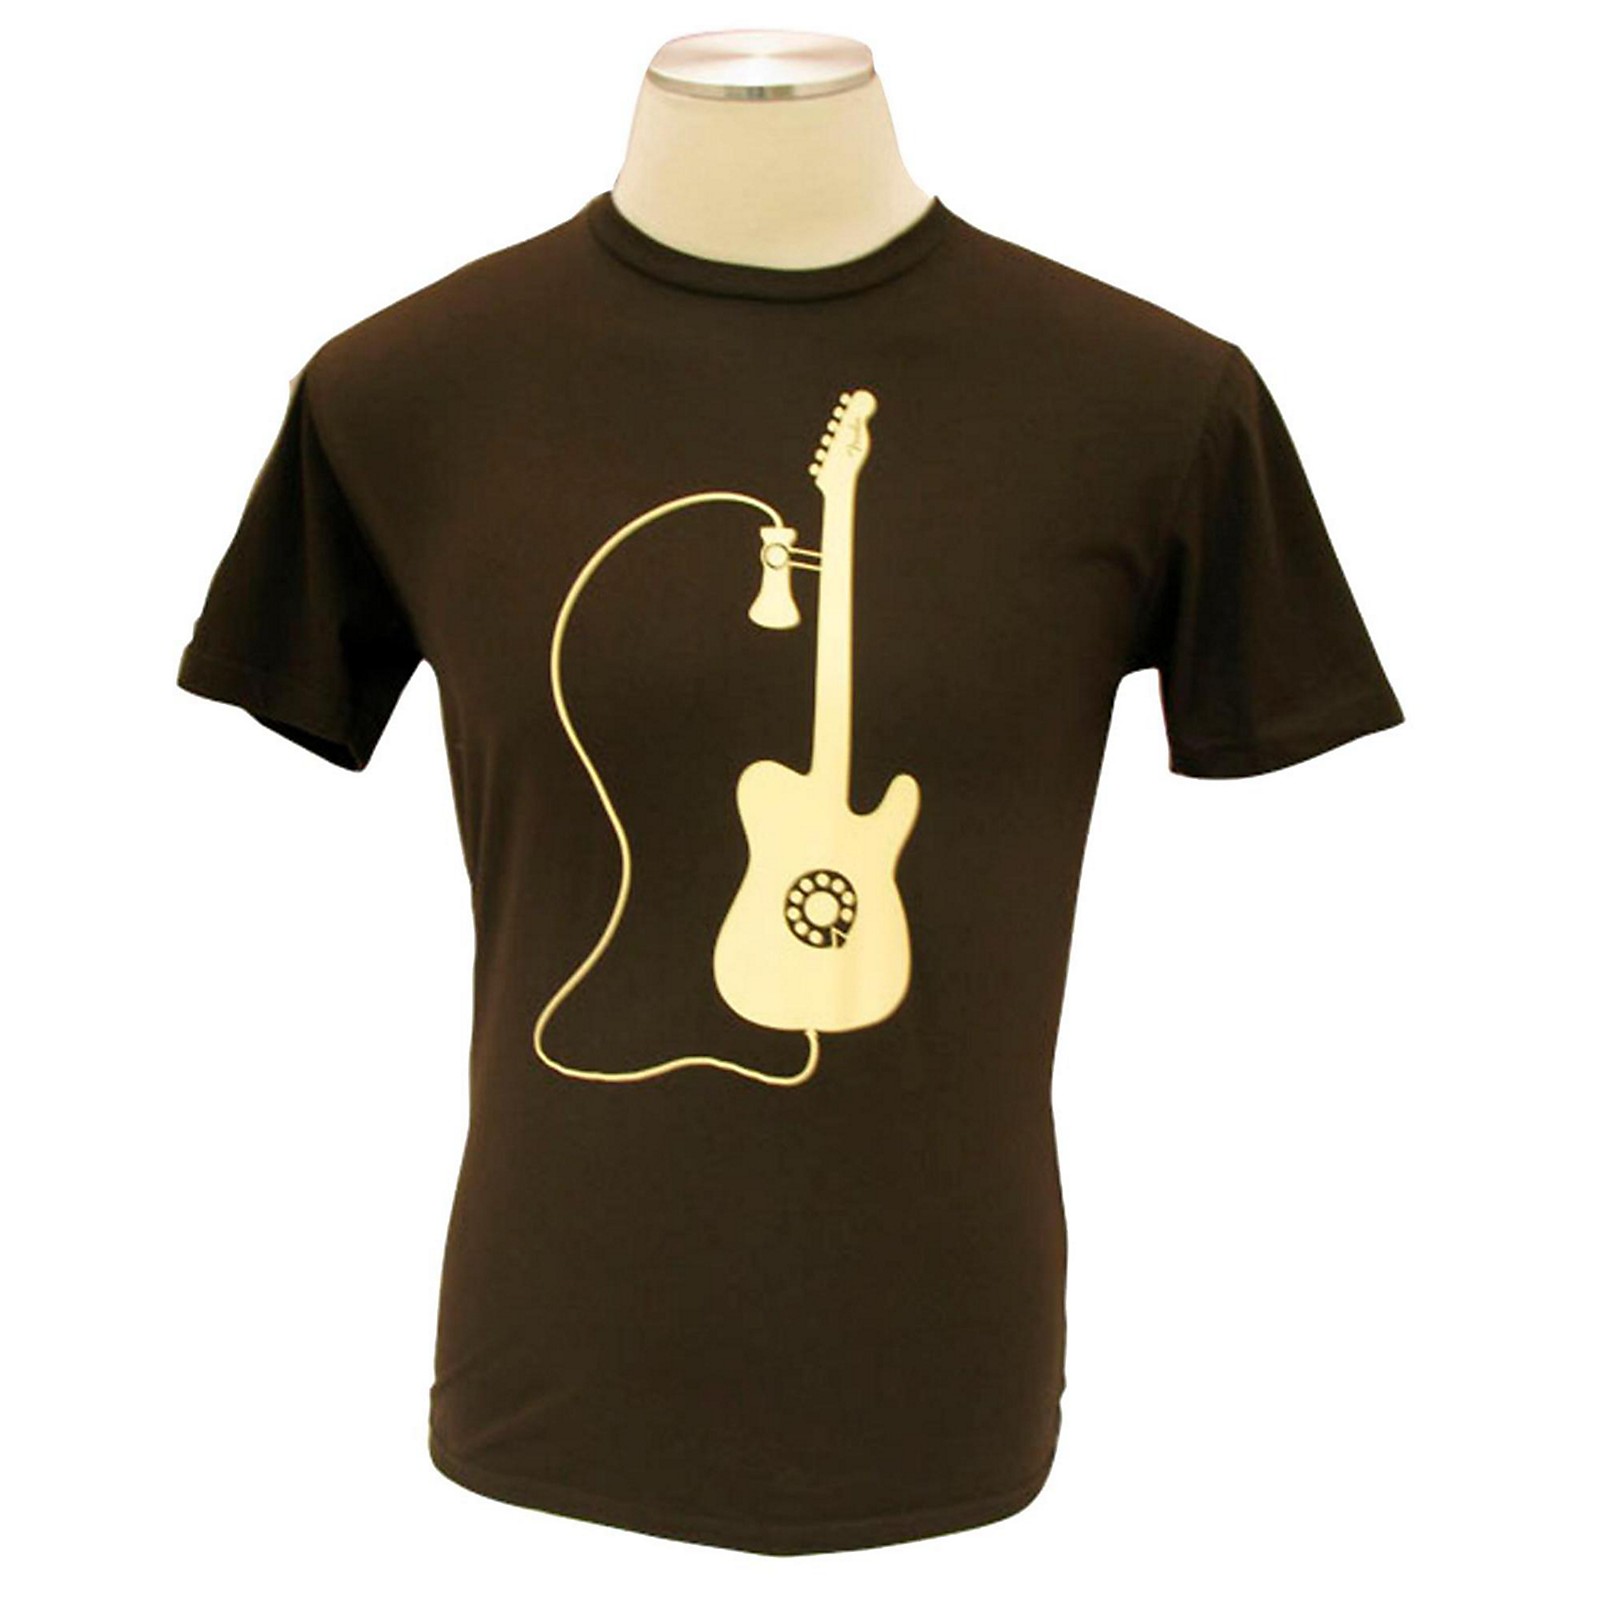 Fender Inventions T-Shirt | Musician's Friend